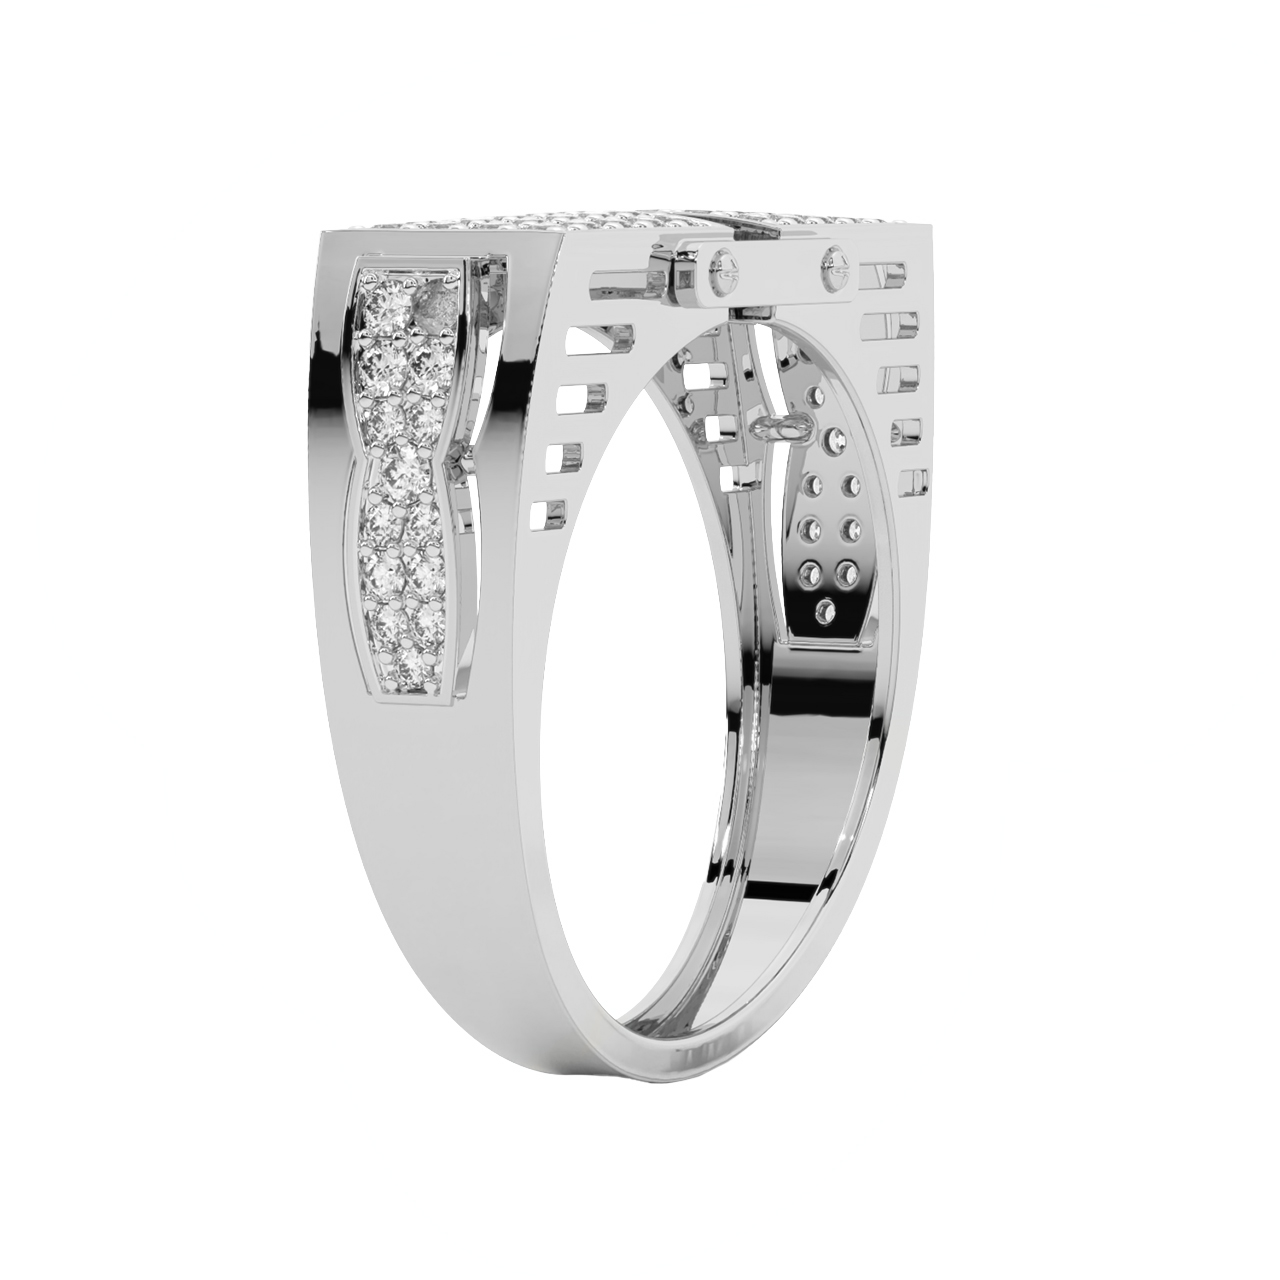 Formal Design Ring For Men